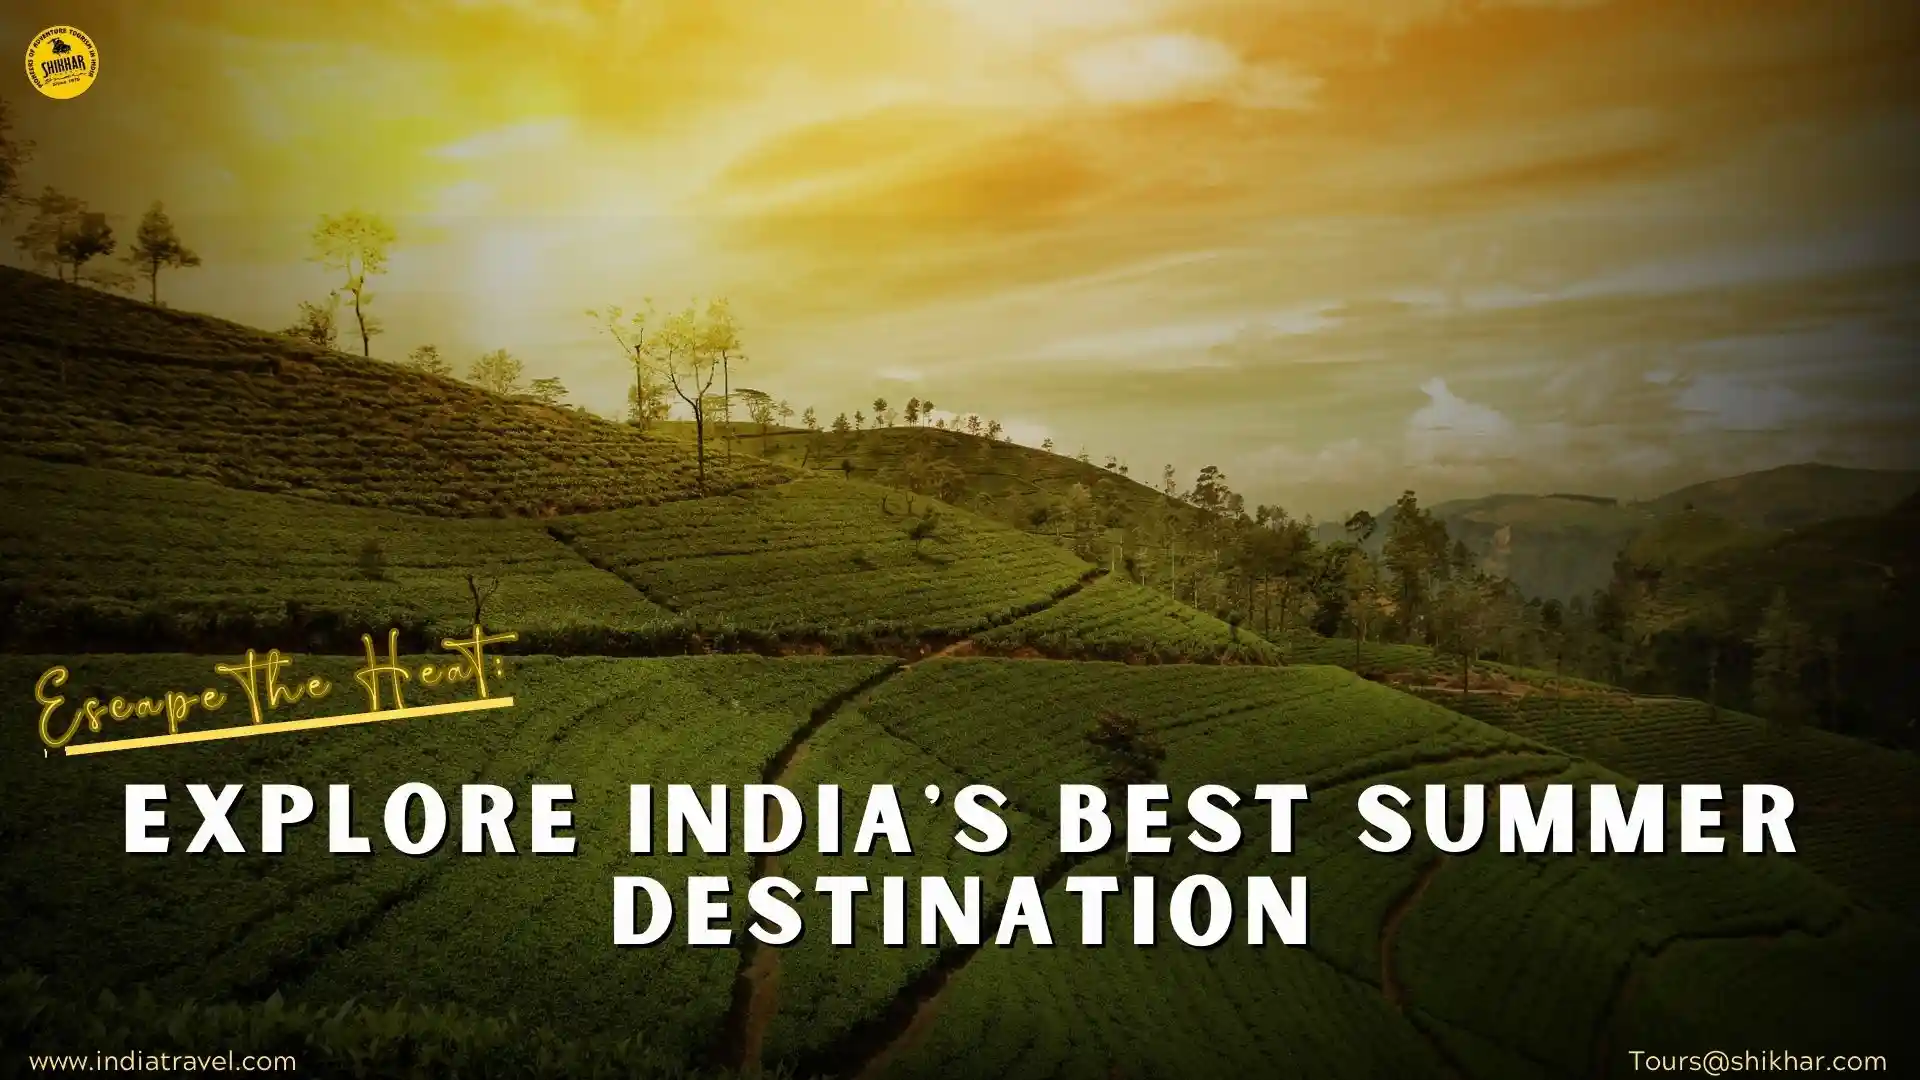 Escape the Heat: Explore India’s Best Summer Destination for Global Tourists